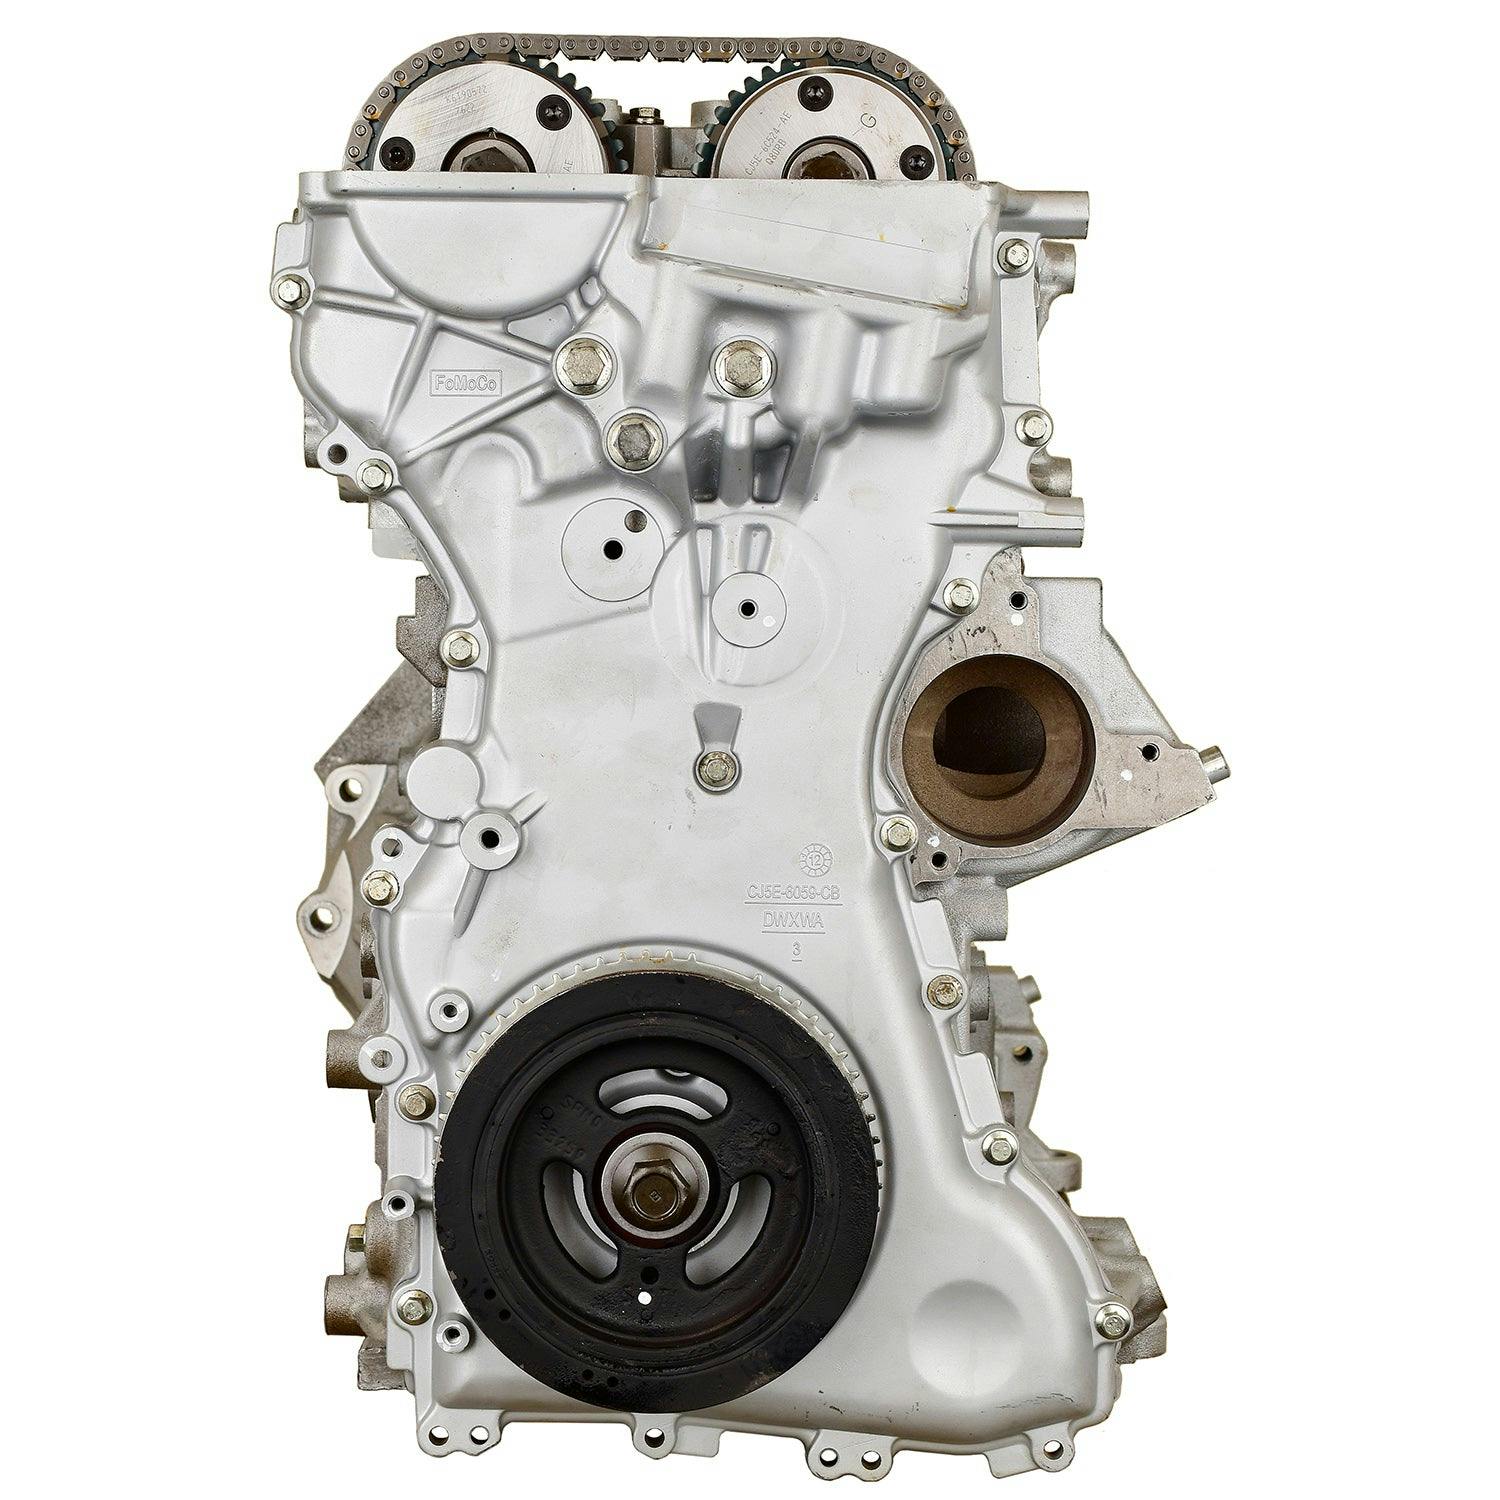 2L Inline-4 Engine for 2013-2018 Ford Escape, Focus, Fusion/Lincoln MKC, MKZ